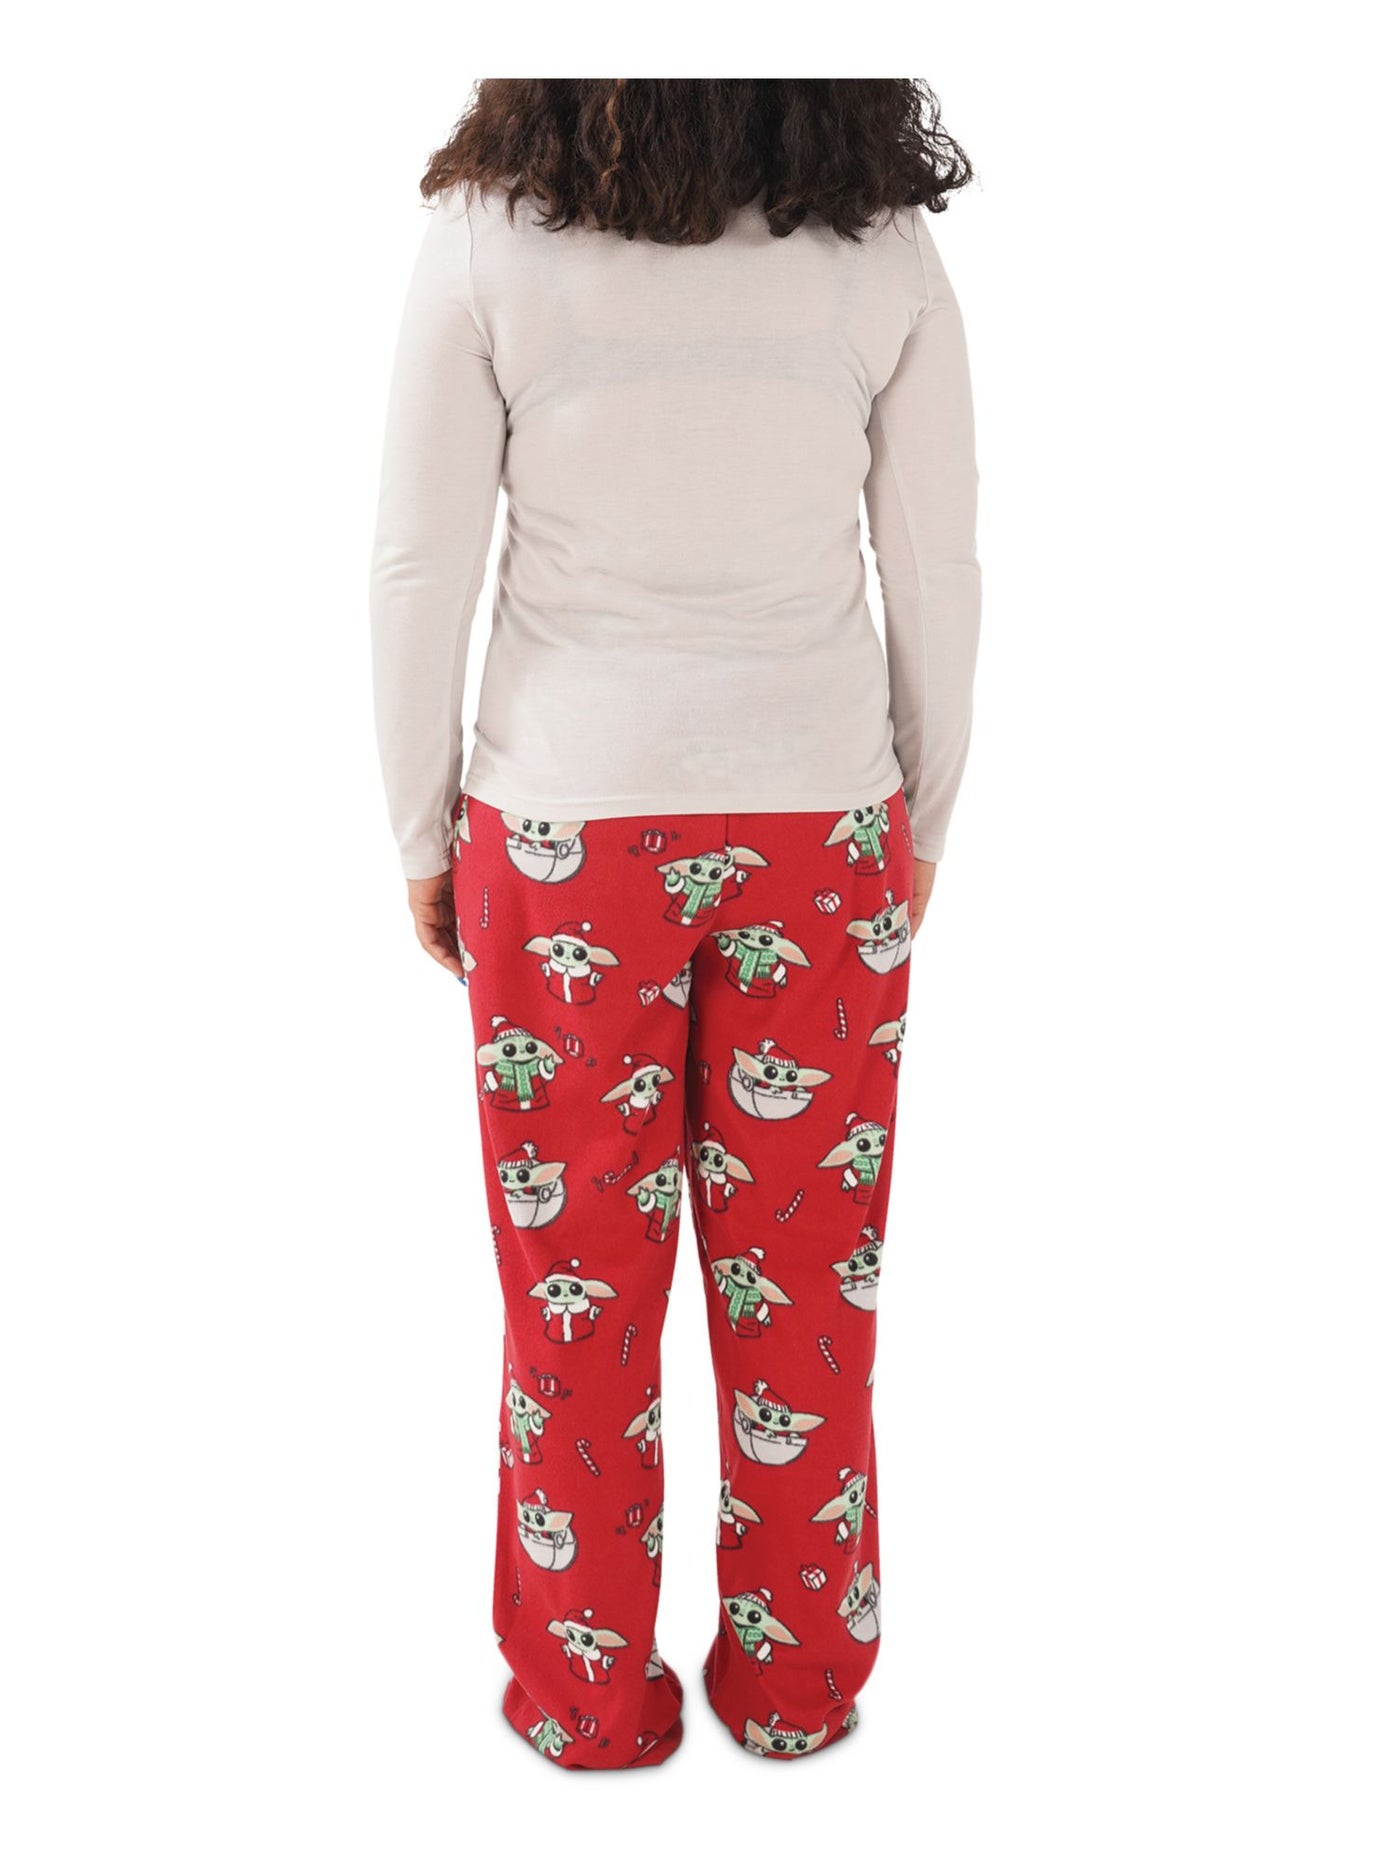 HYBRID APPAREL Womens Red Graphic Top Elastic Band Long Sleeve Straight leg Pants Pajamas M